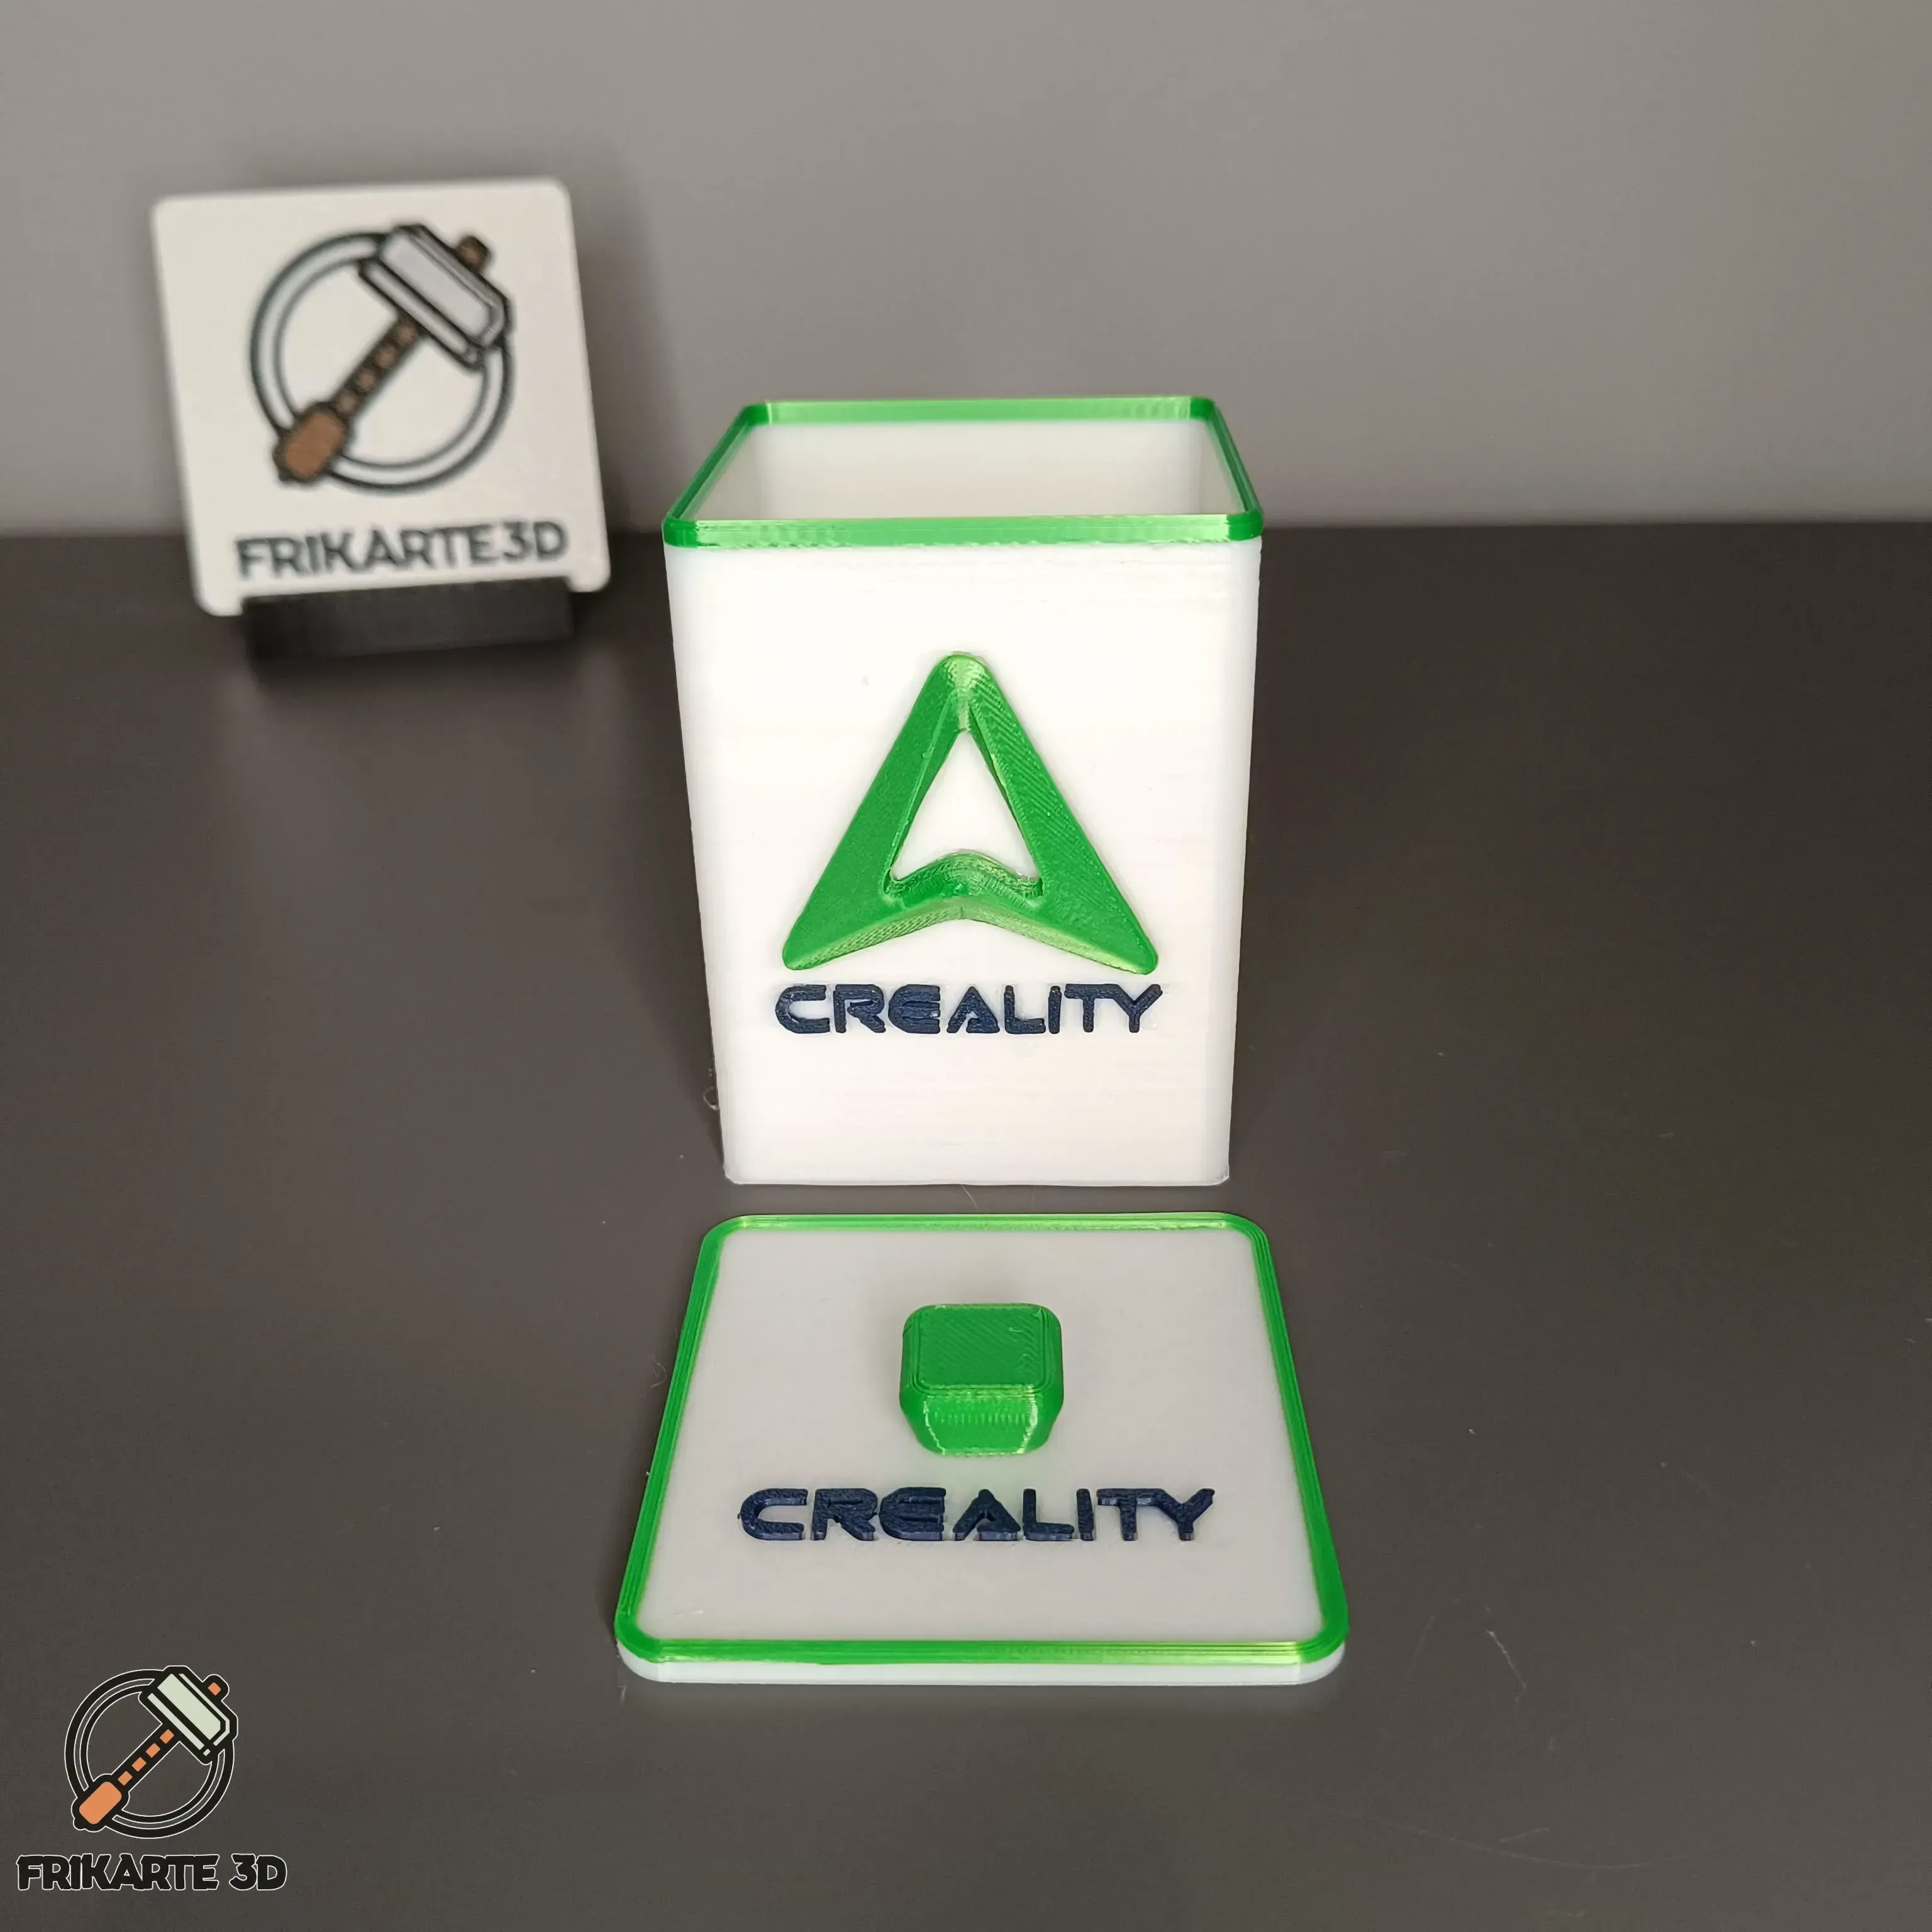 Creality Desk Holder and Box